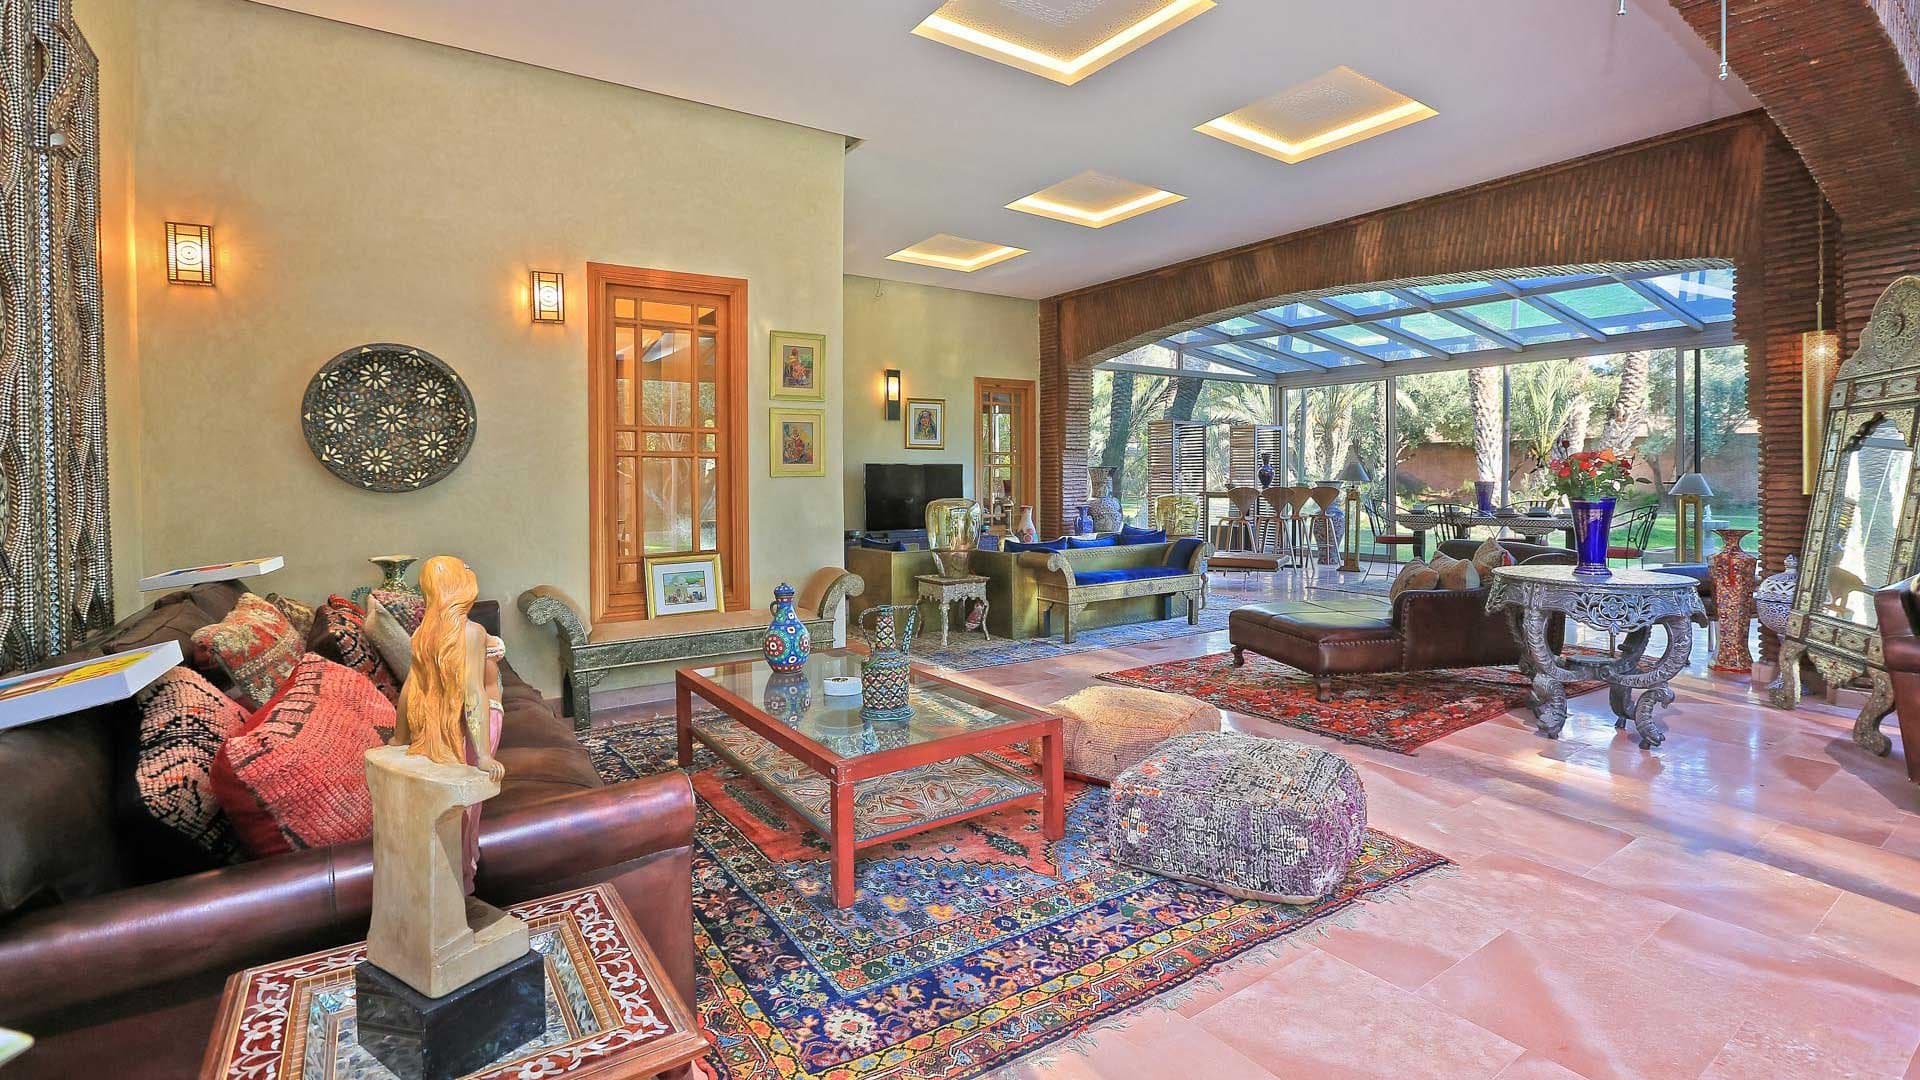 8 Bedroom Villa For Sale Marrakech Lp08726 2de7ced61bbffe00.jpg